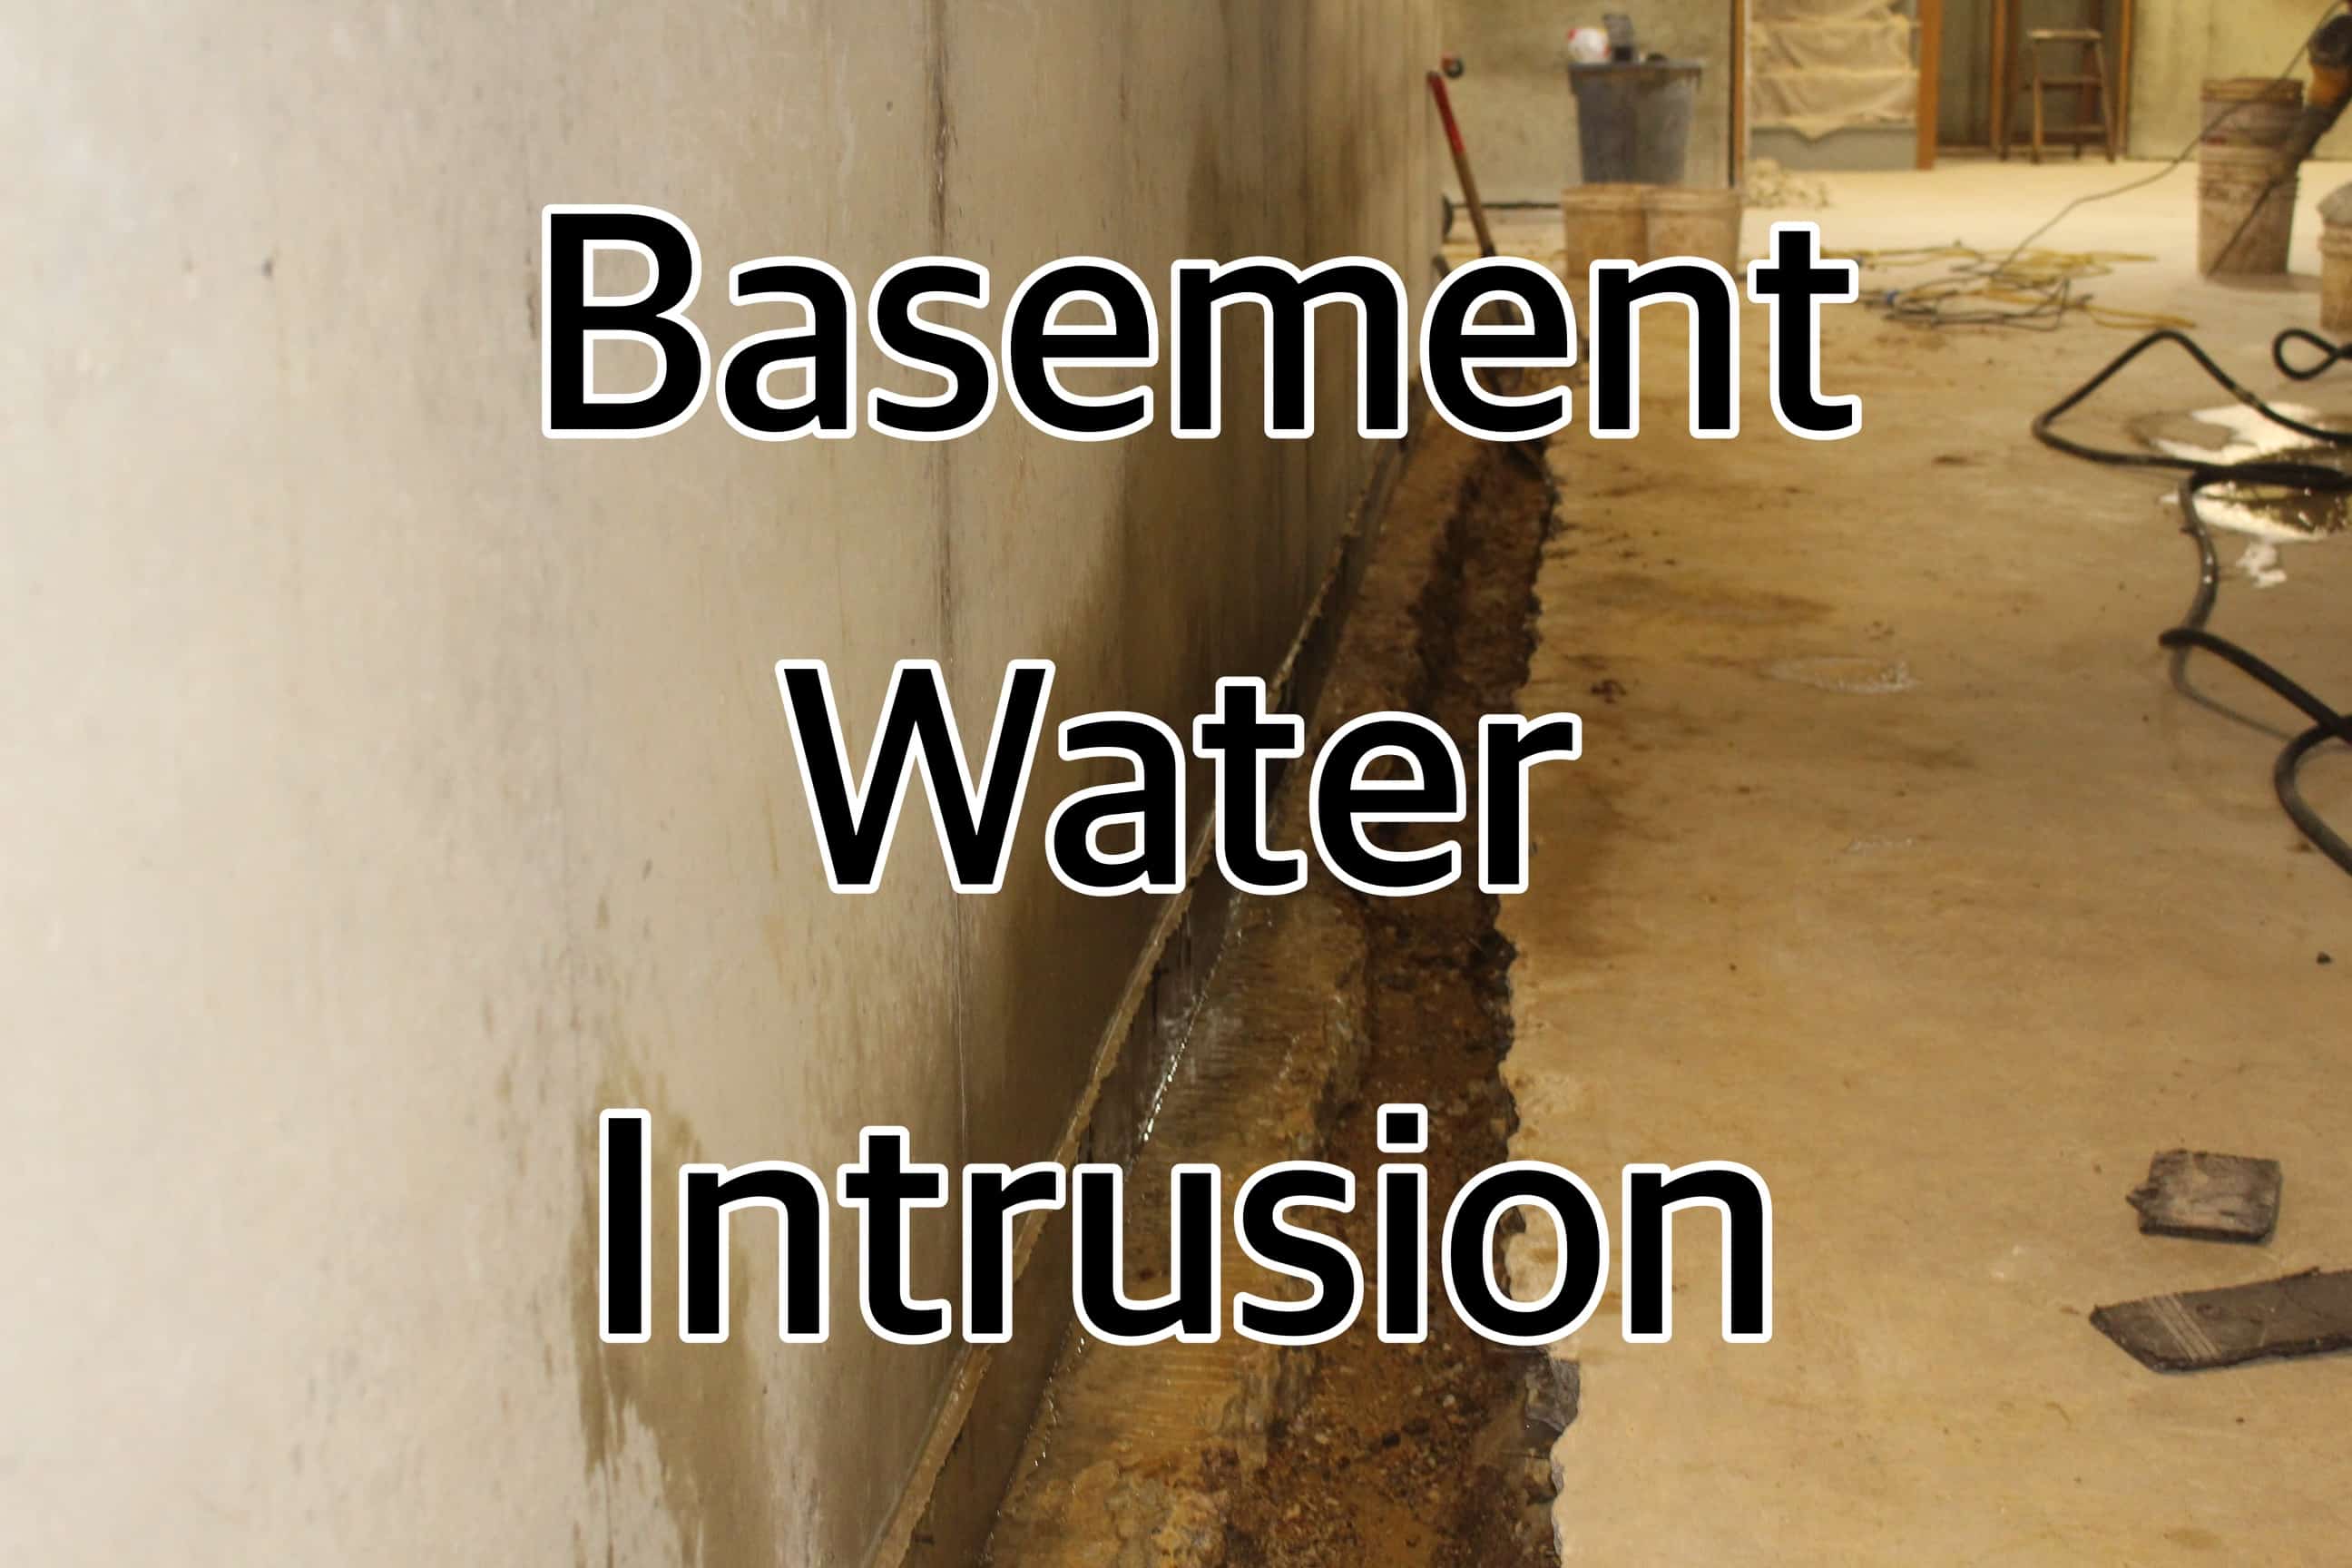 Basement Water Intrusion